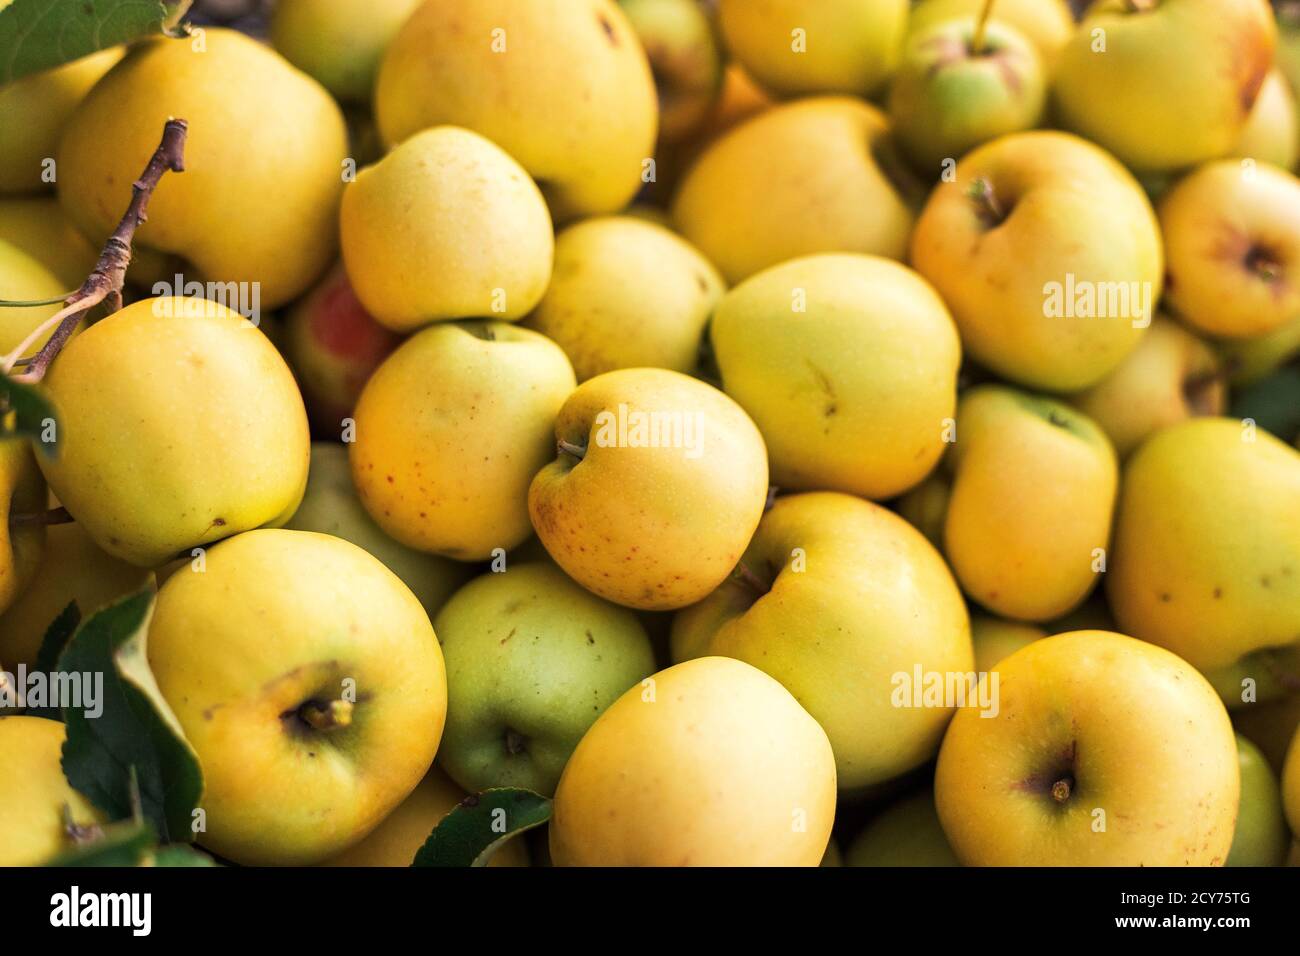 https://c8.alamy.com/comp/2CY75TG/fresh-juicy-golden-green-apples-natural-background-close-up-of-apples-in-box-harvest-vitamins-vegetarians-fruits-crop-organic-gardening-long-2CY75TG.jpg